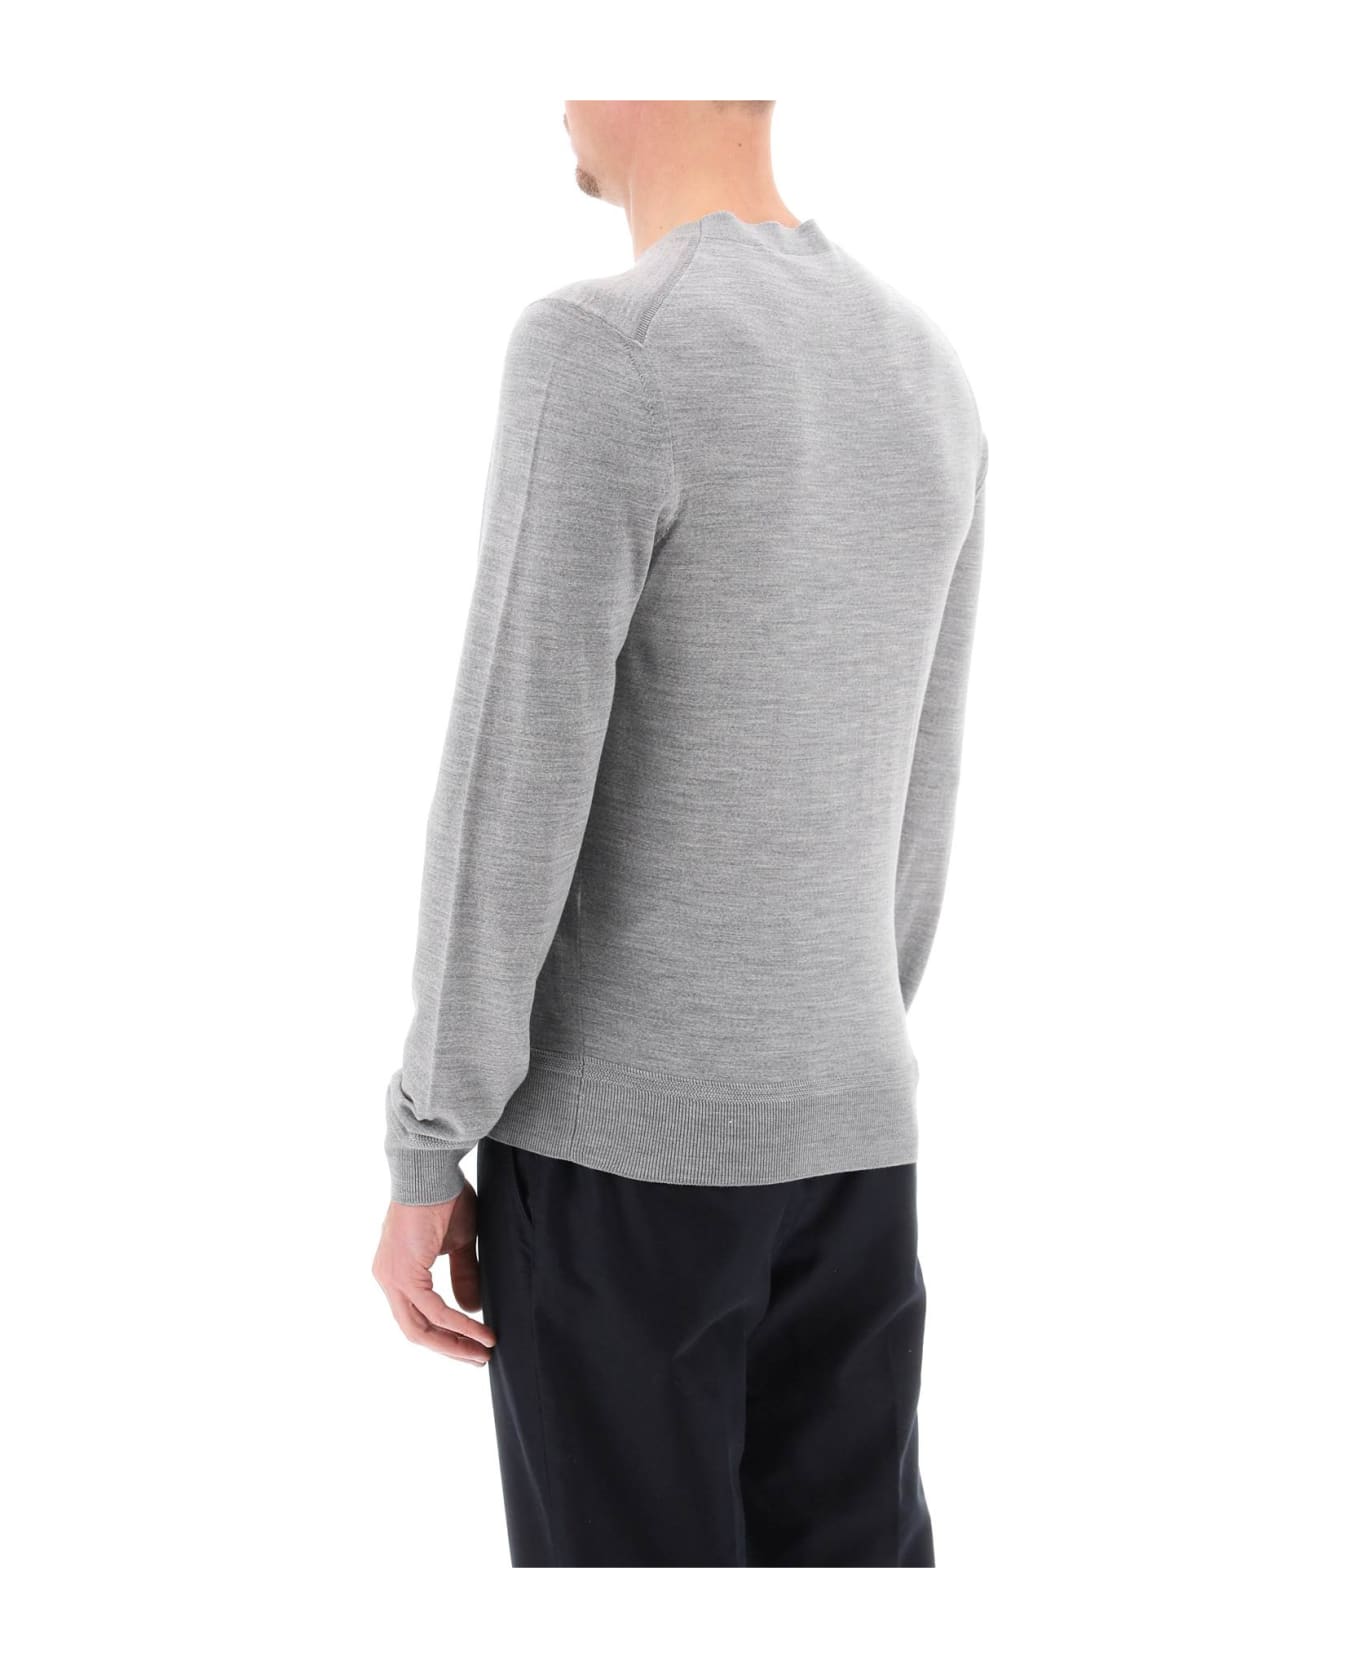 Tom Ford Light Wool Sweater - LIGHT GREY (Grey)